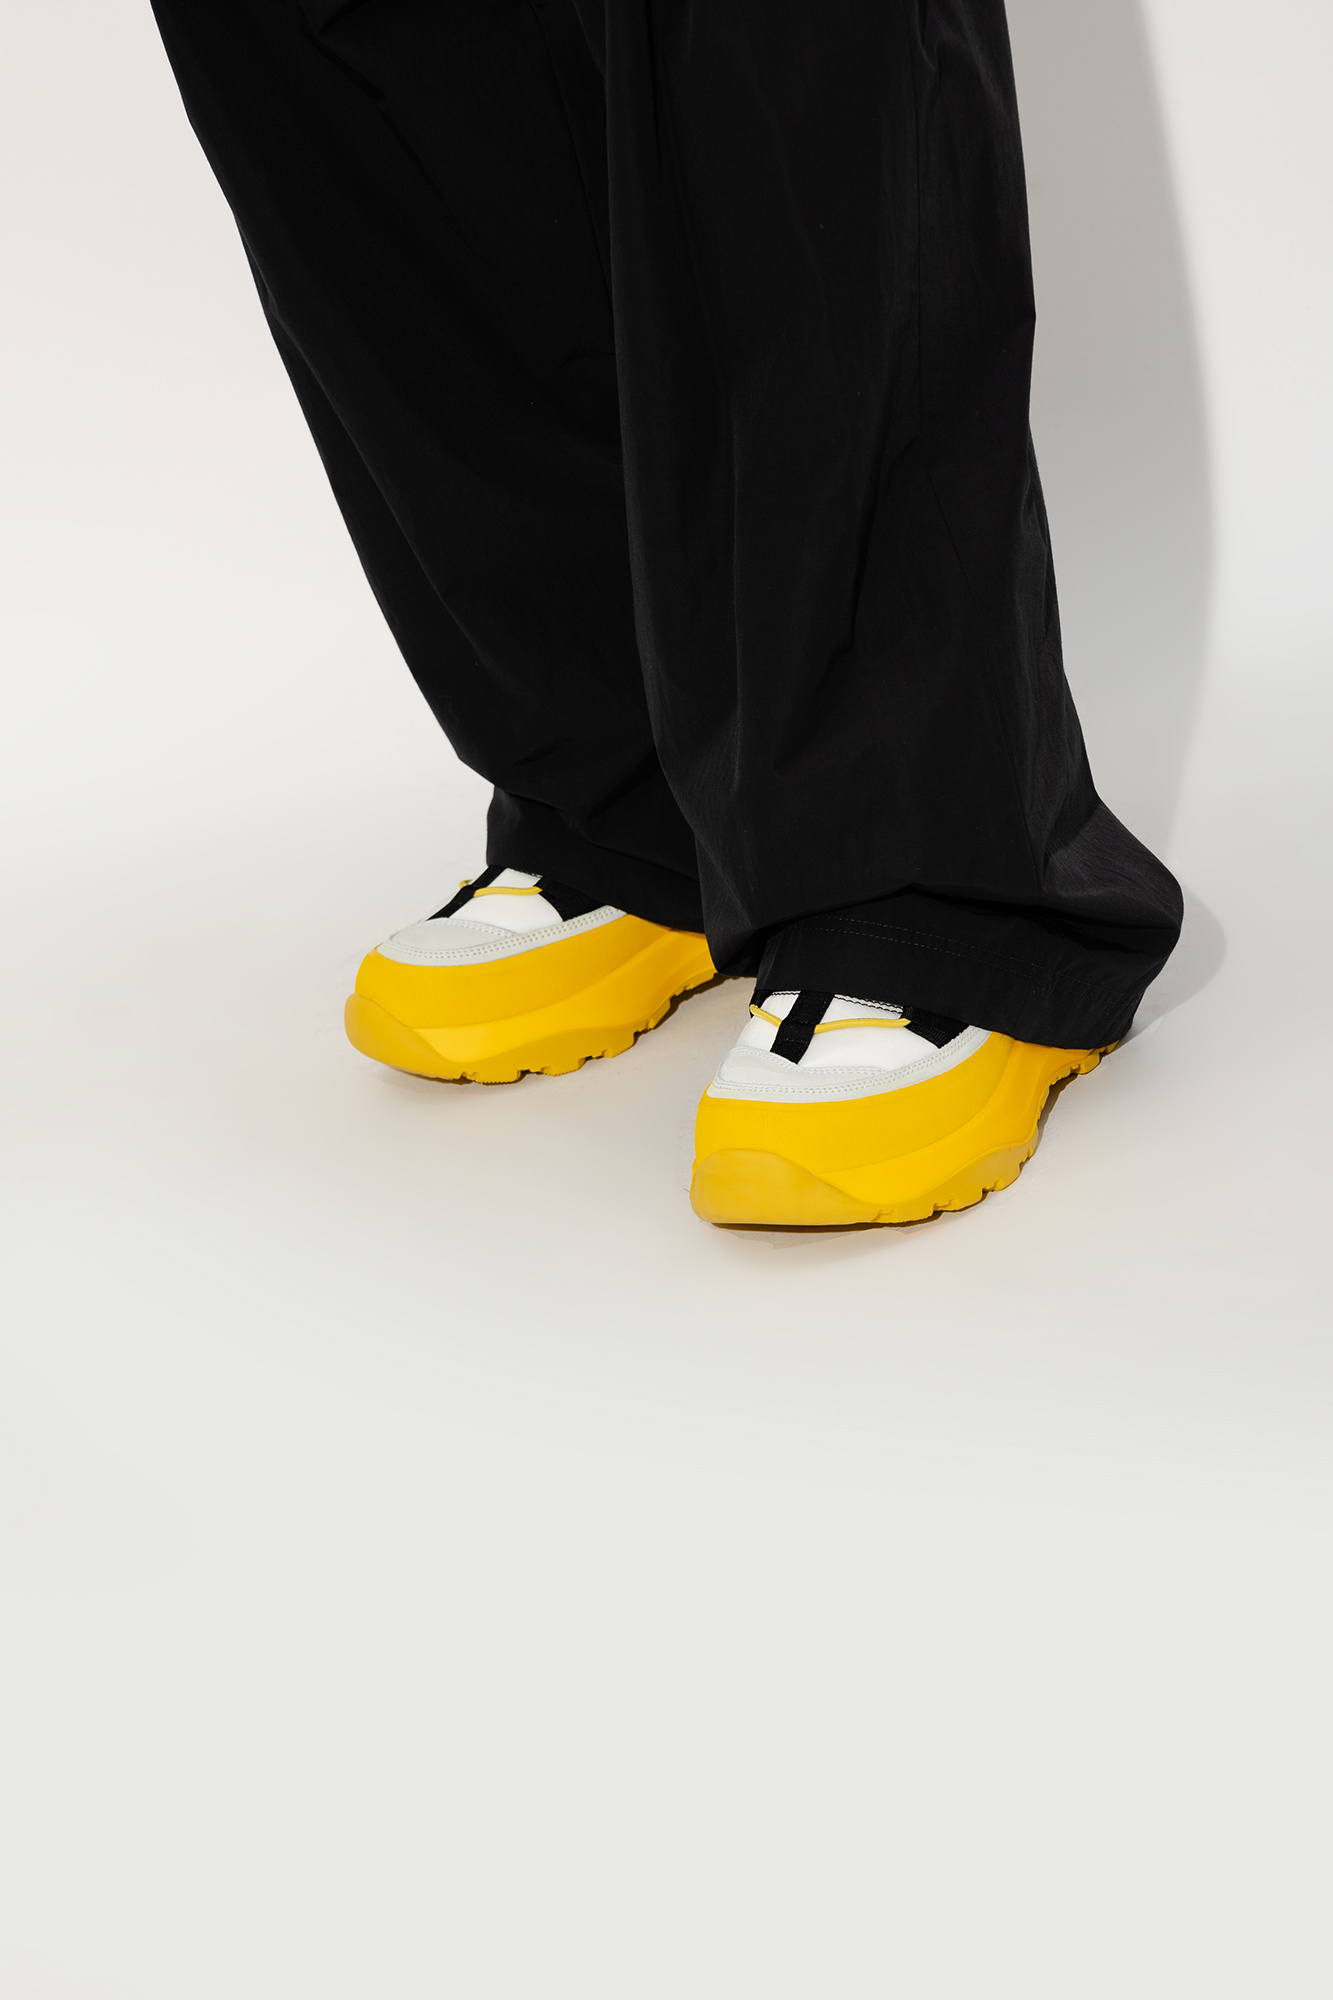 Canada Goose nike acg 3d printed concept shoe